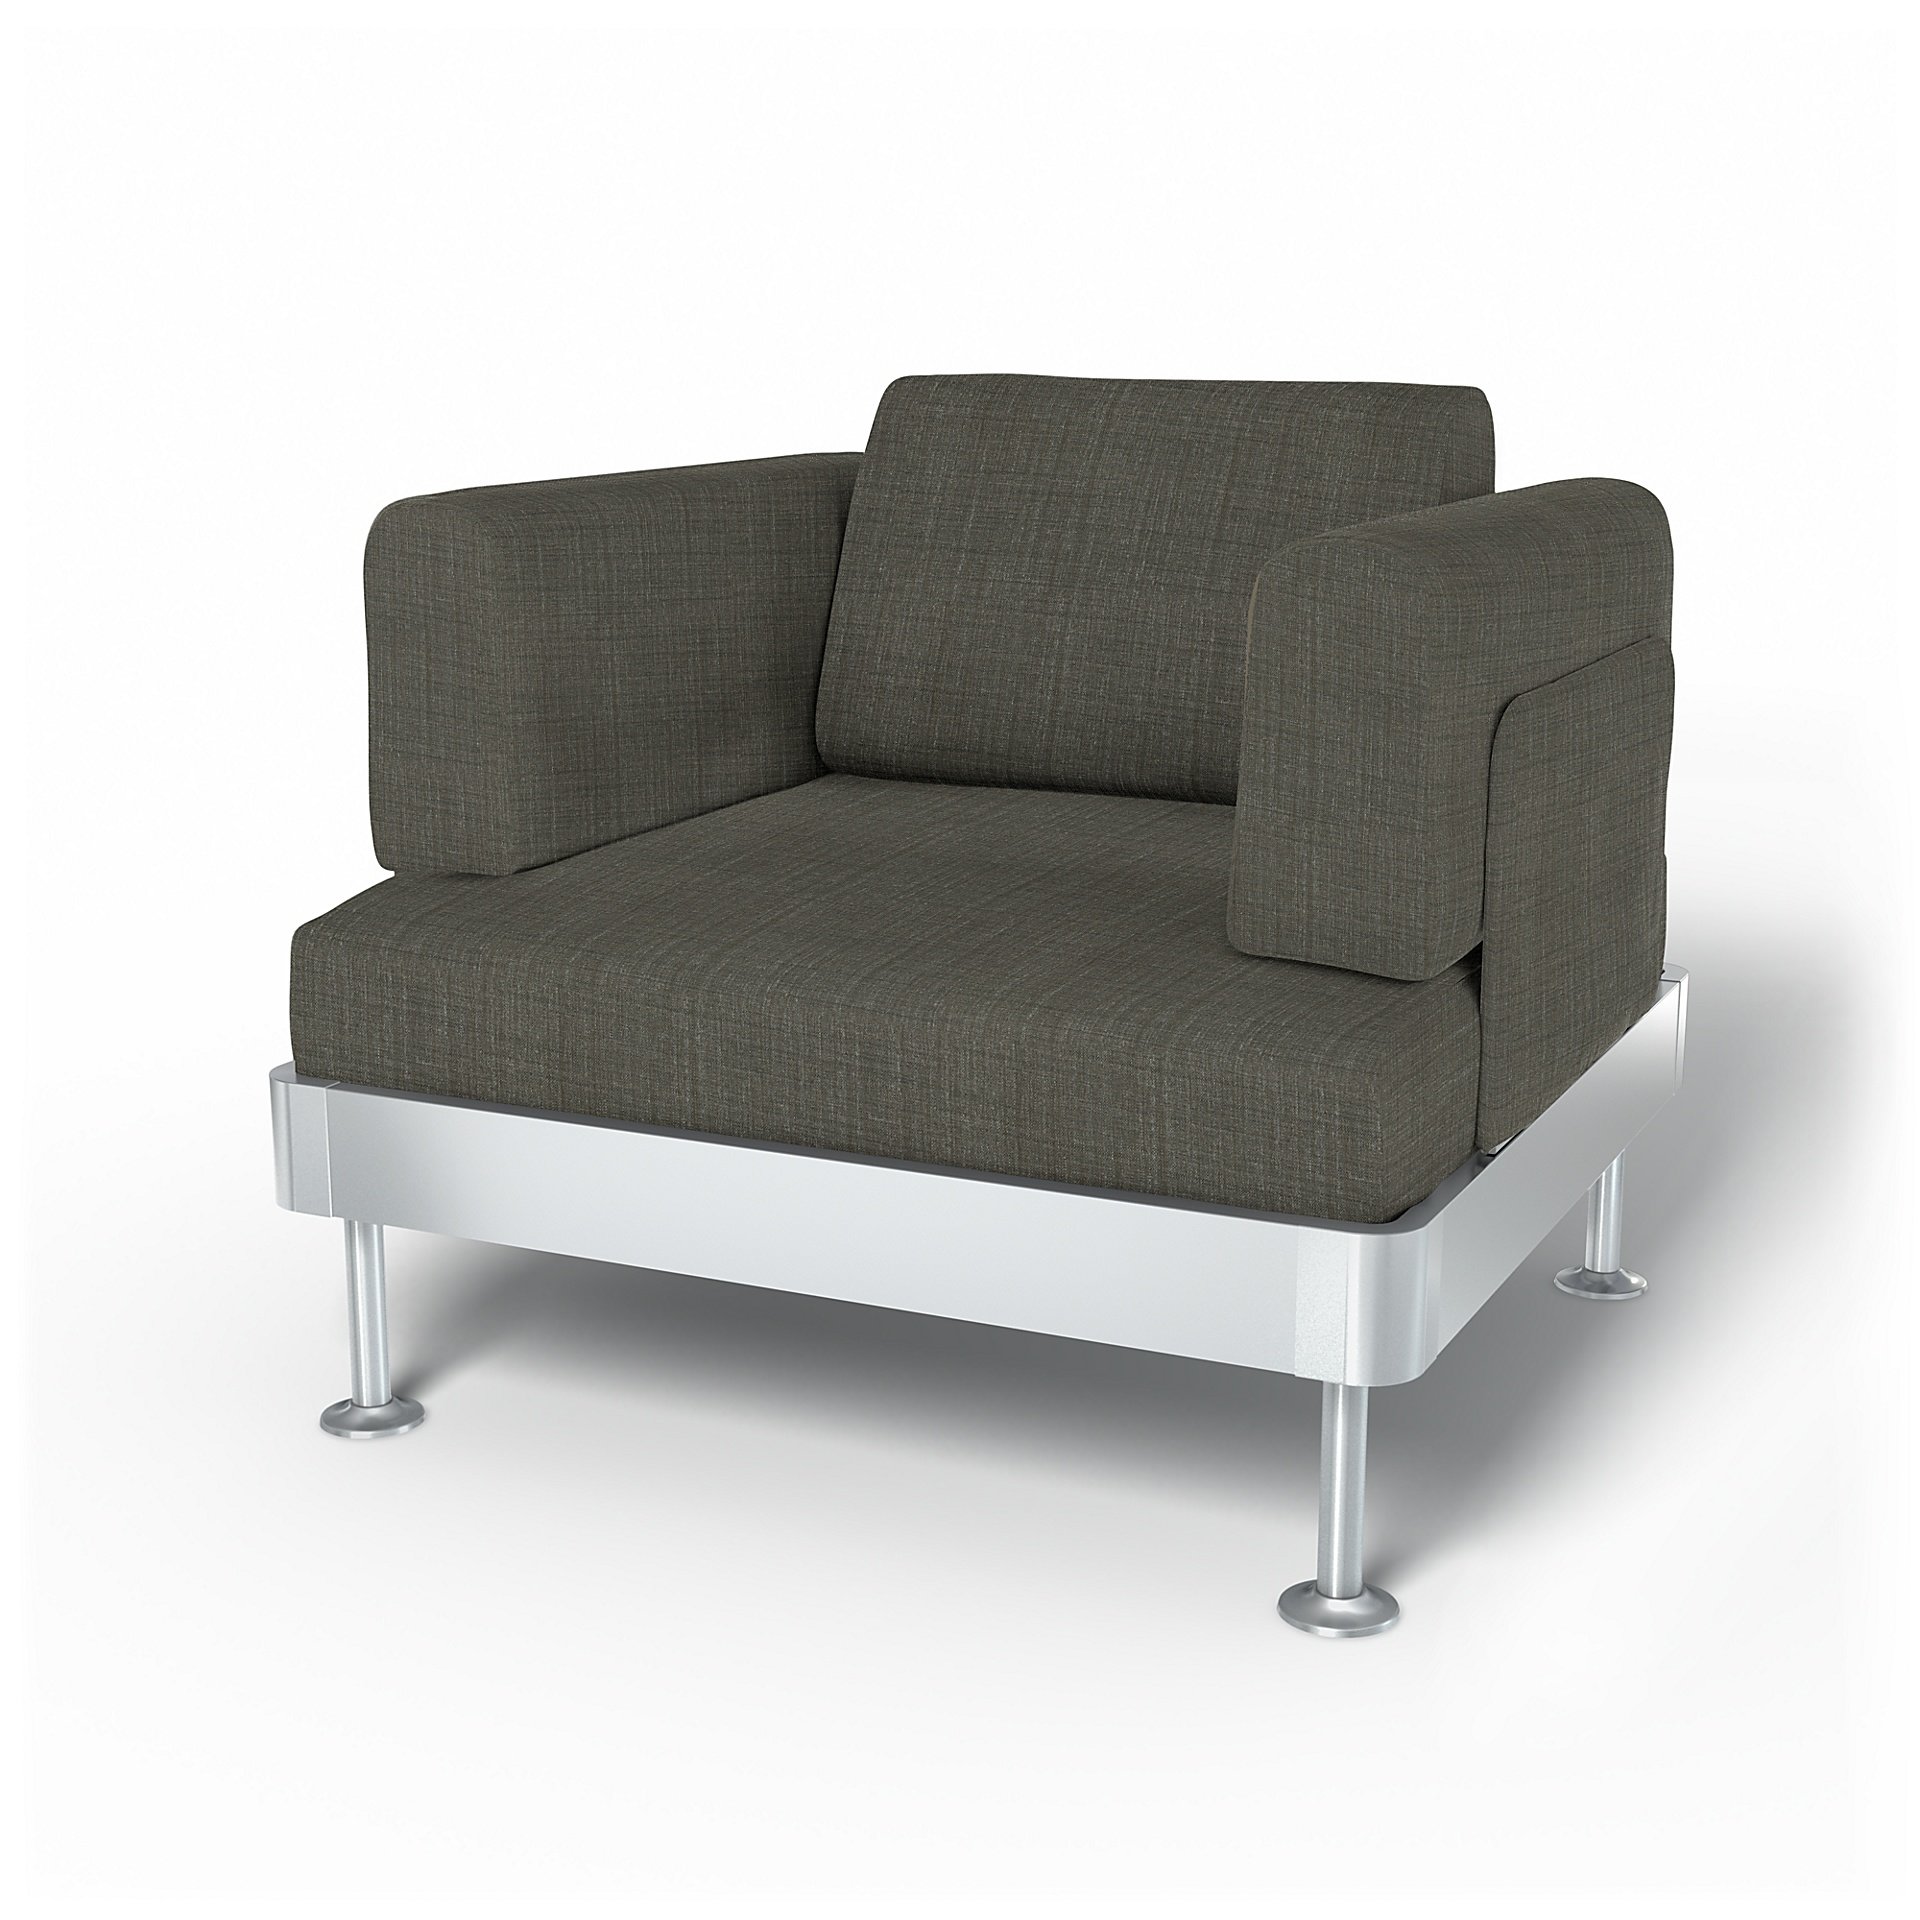 IKEA - Delaktig Armchair Cover, Mole Brown, Boucle & Texture - Bemz